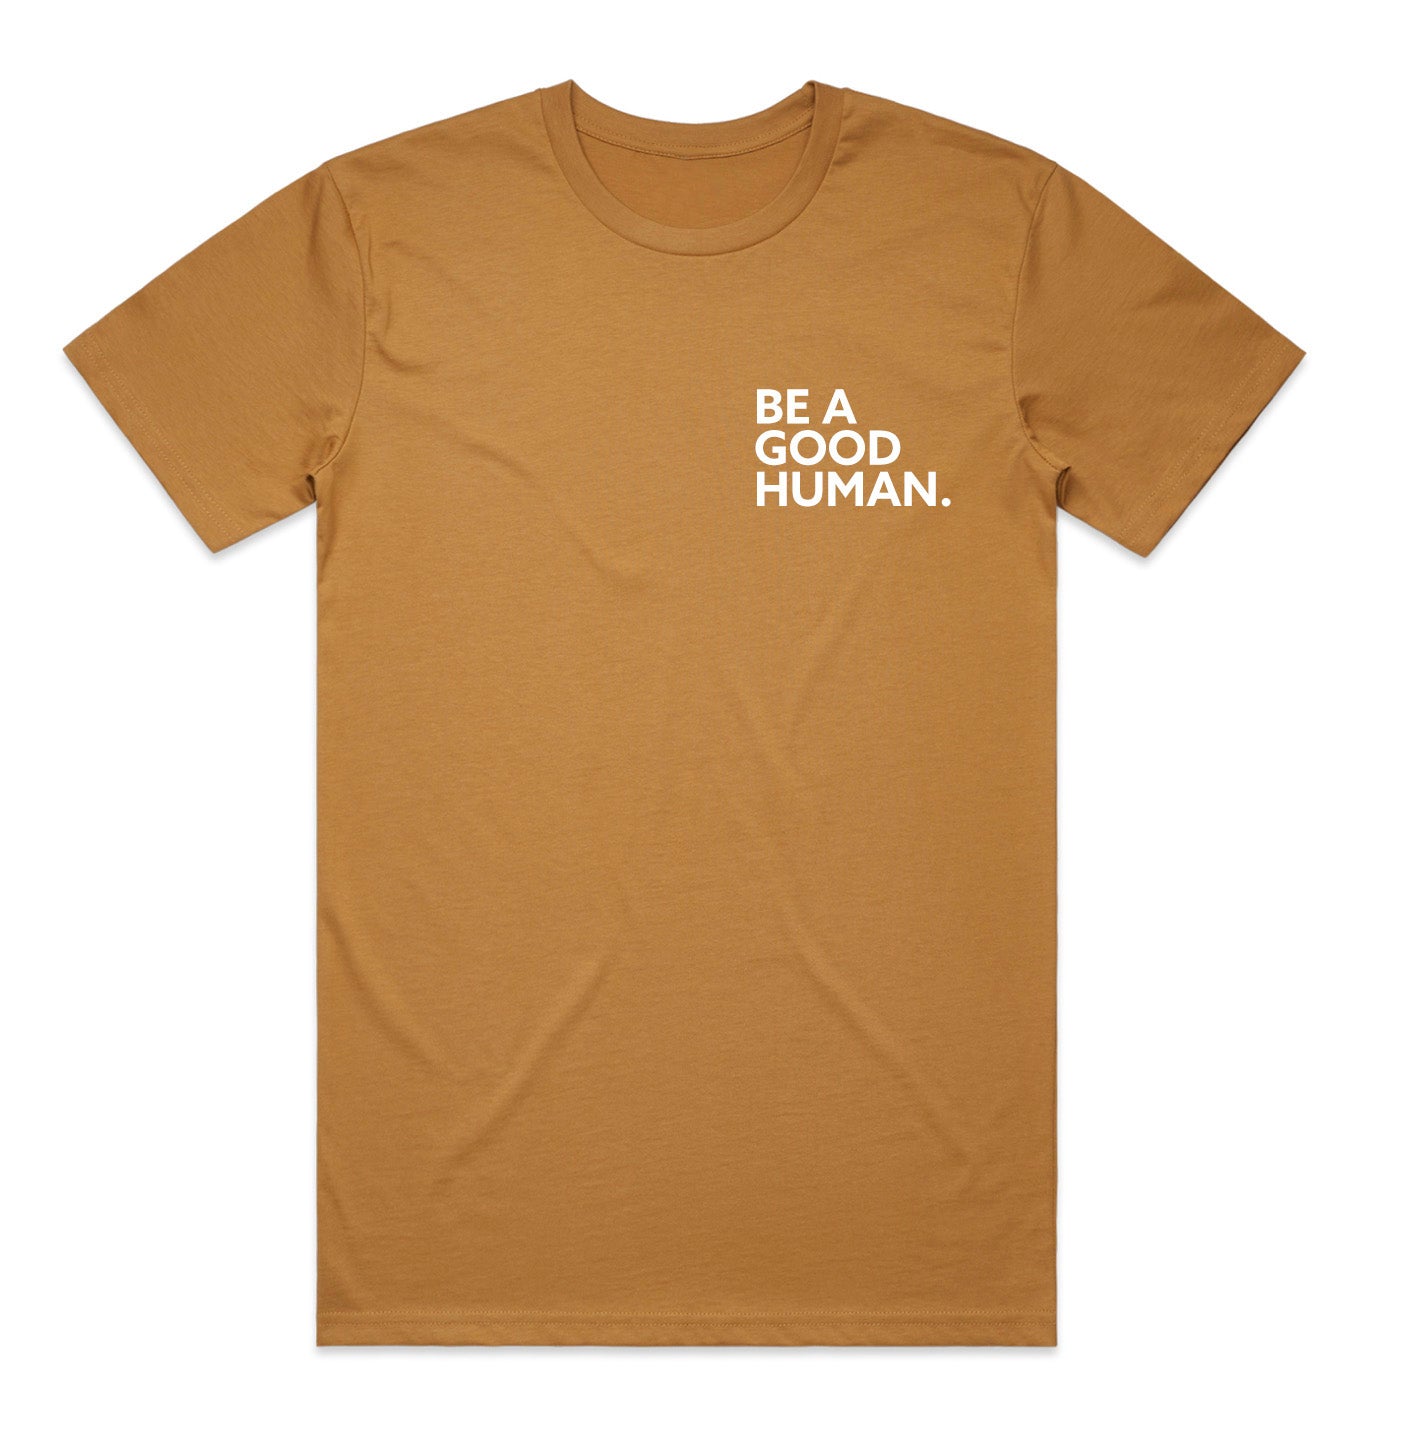 BE A GOOD HUMAN T-Shirt Camel Color